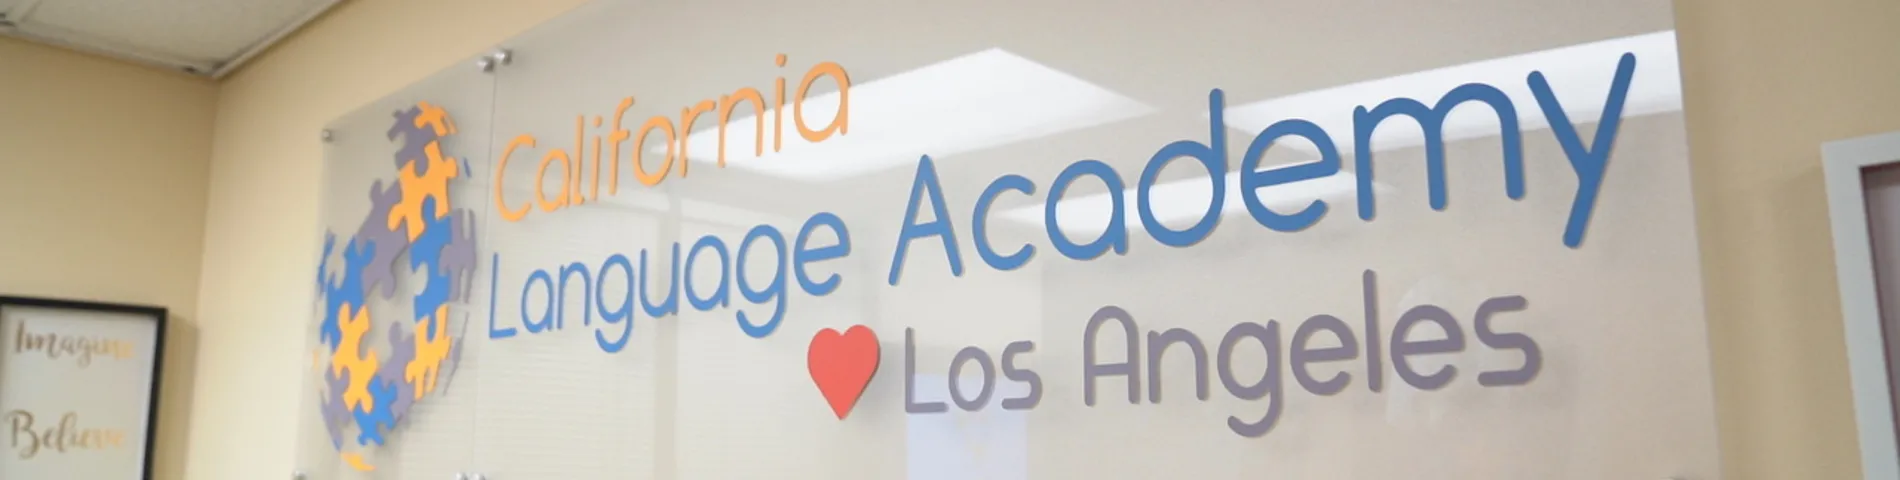 California Language Academy photo 1